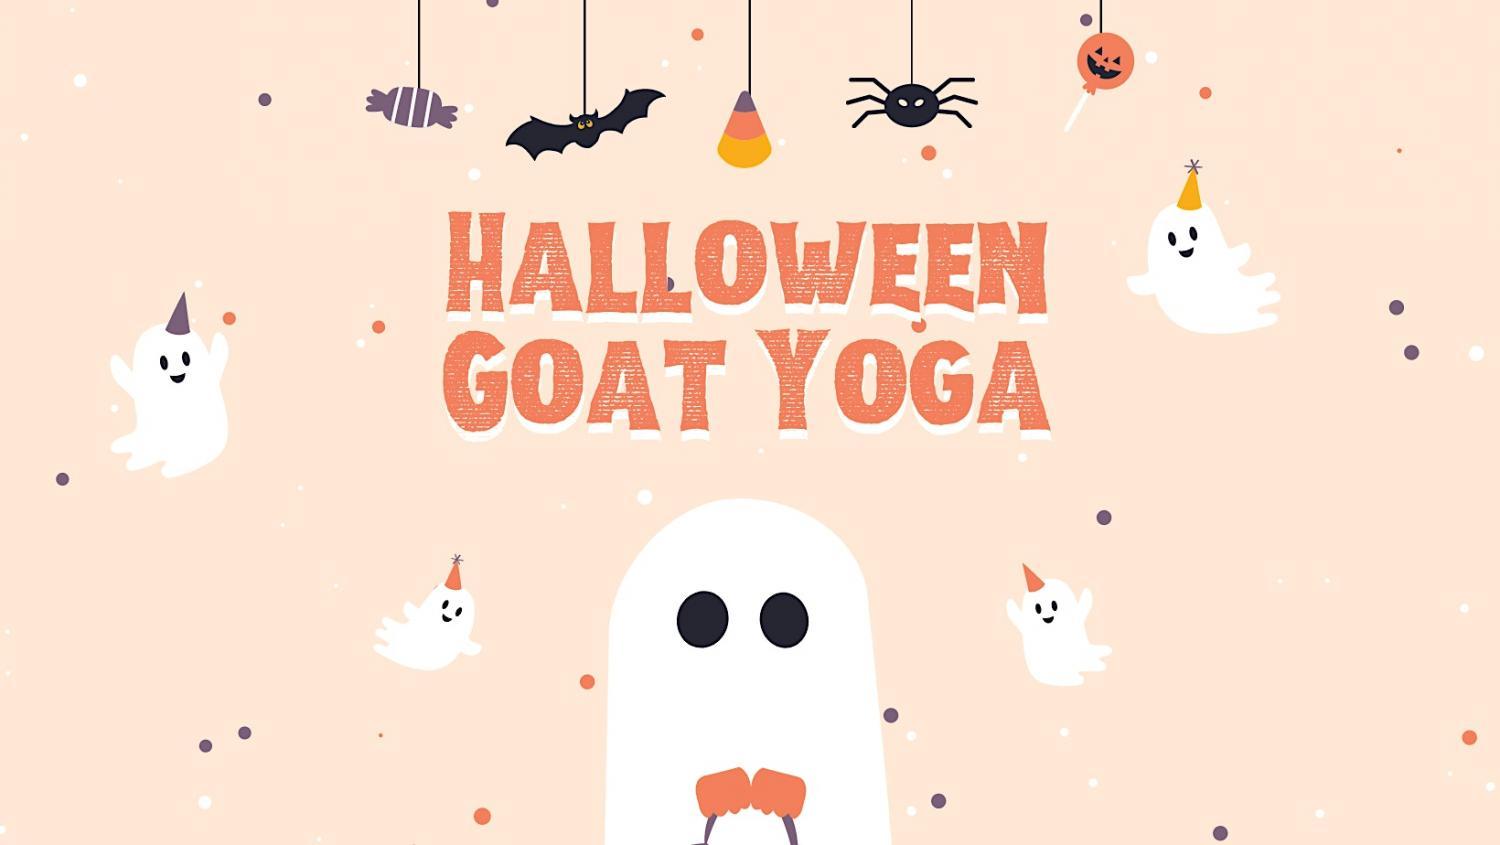 Halloween Goat Yoga
Sat Oct 15, 11:00 AM - Sat Oct 15, 12:00 PM